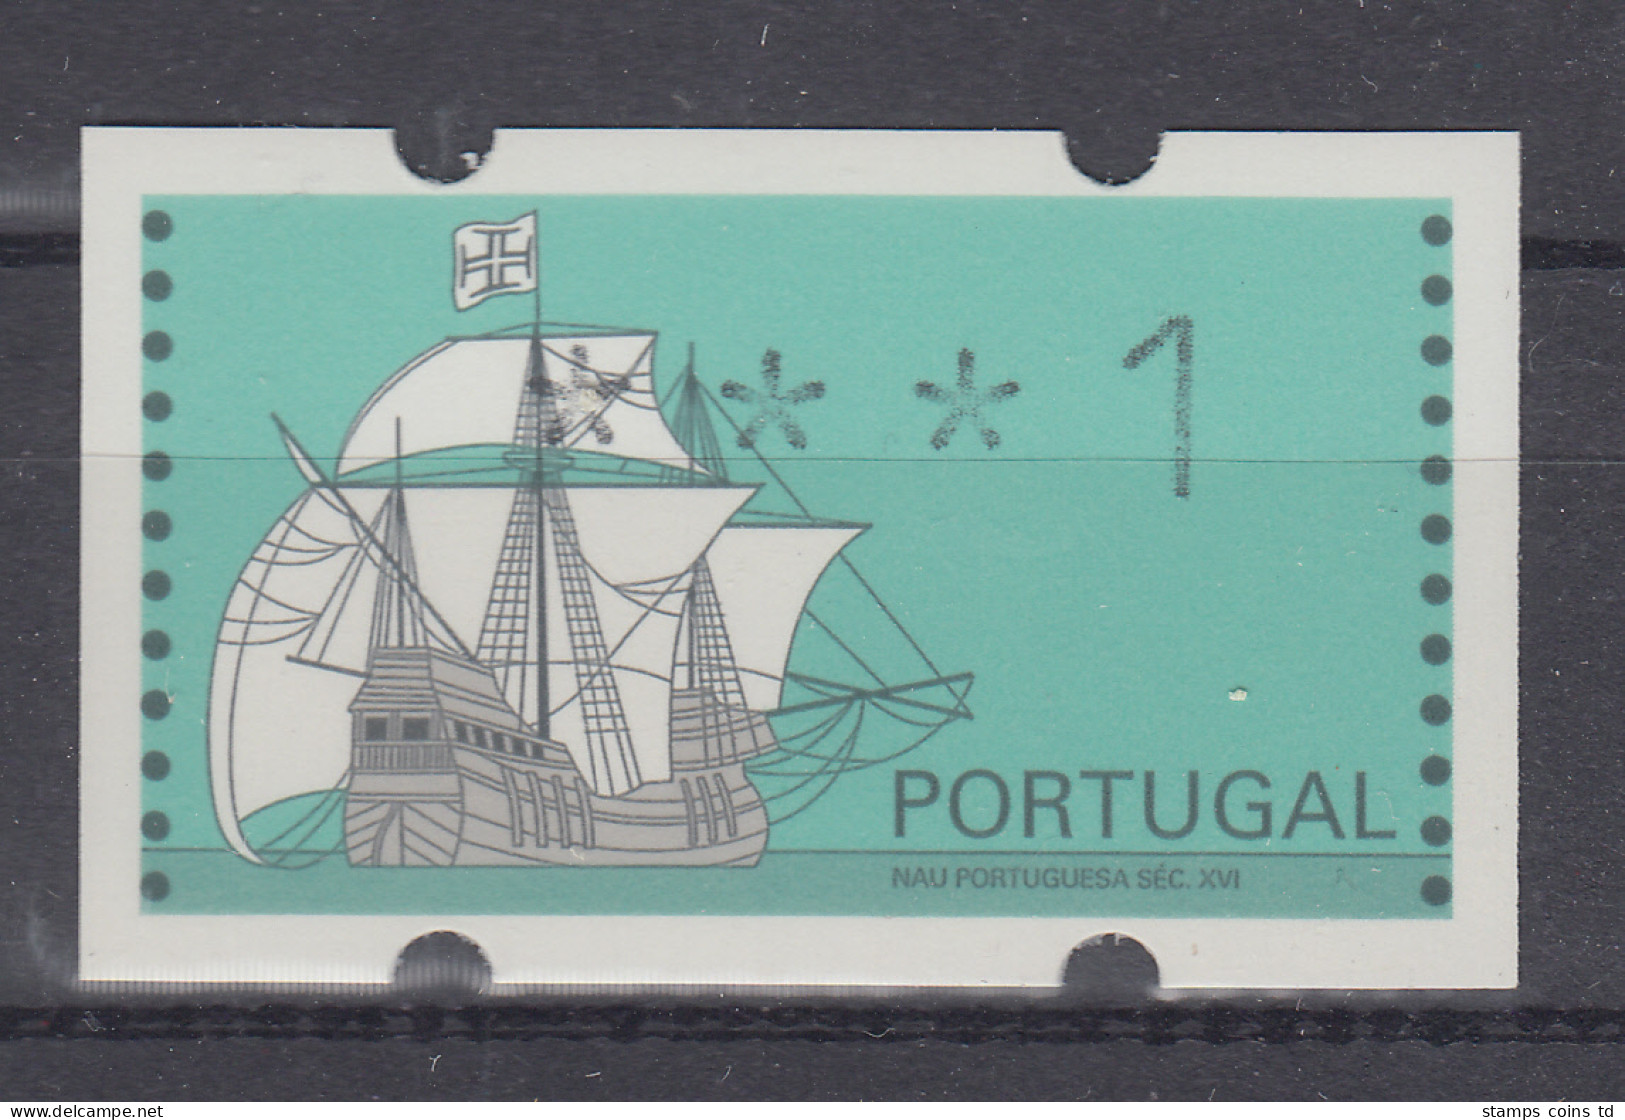 Portugal Klüssendorf ATM Segelschiff Nau ** - Vignette [ATM]